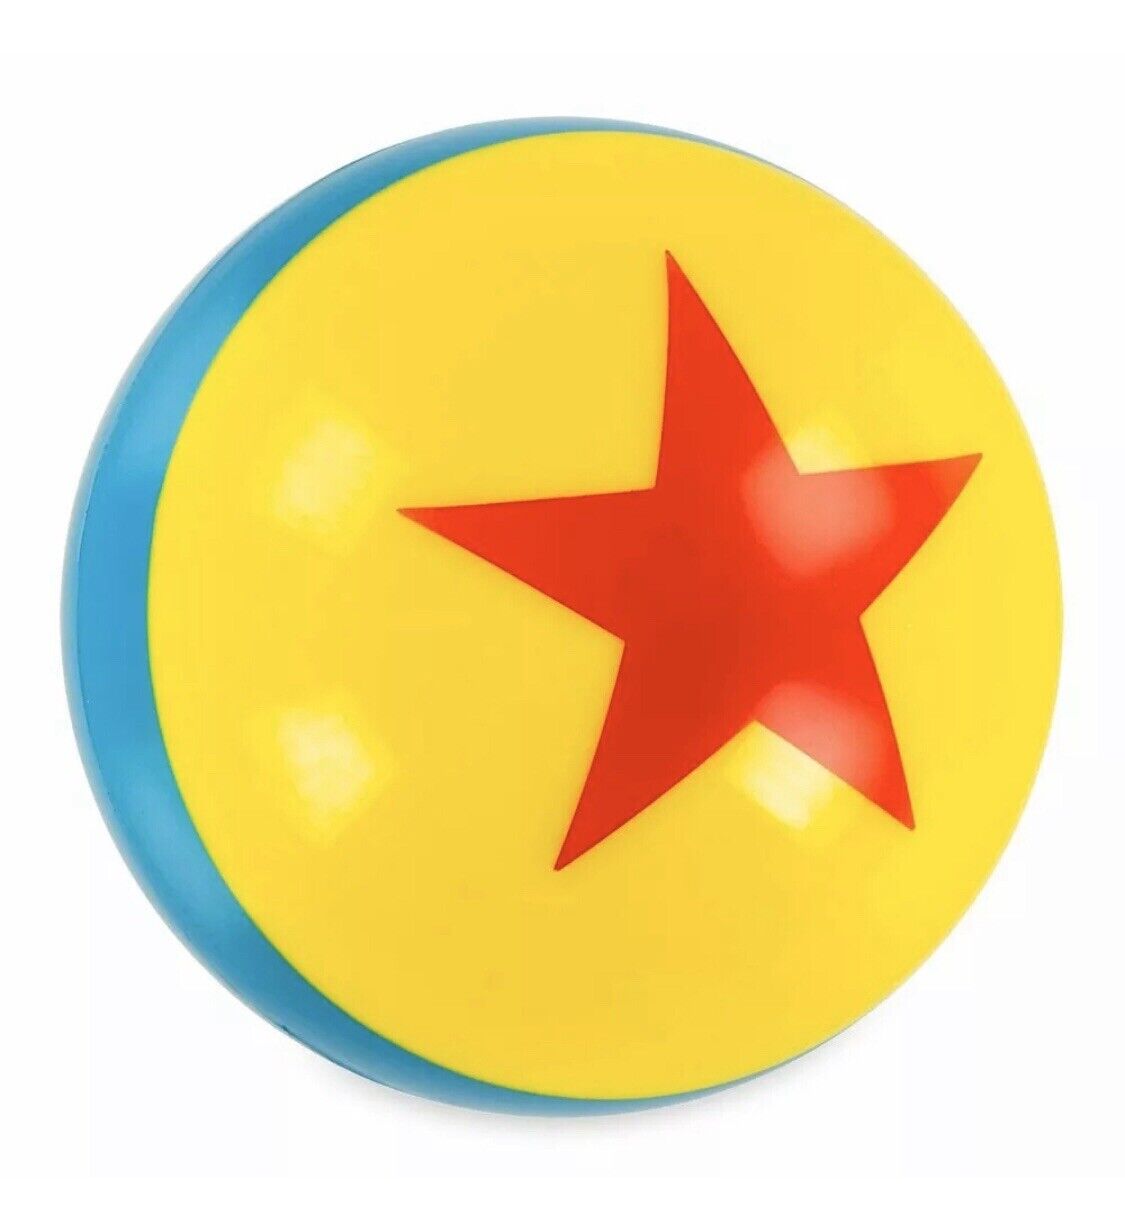 Disney Parks Pixar Toy Story Luxo Jr Thick Bouncy Ball (4” Approx. Diameter)